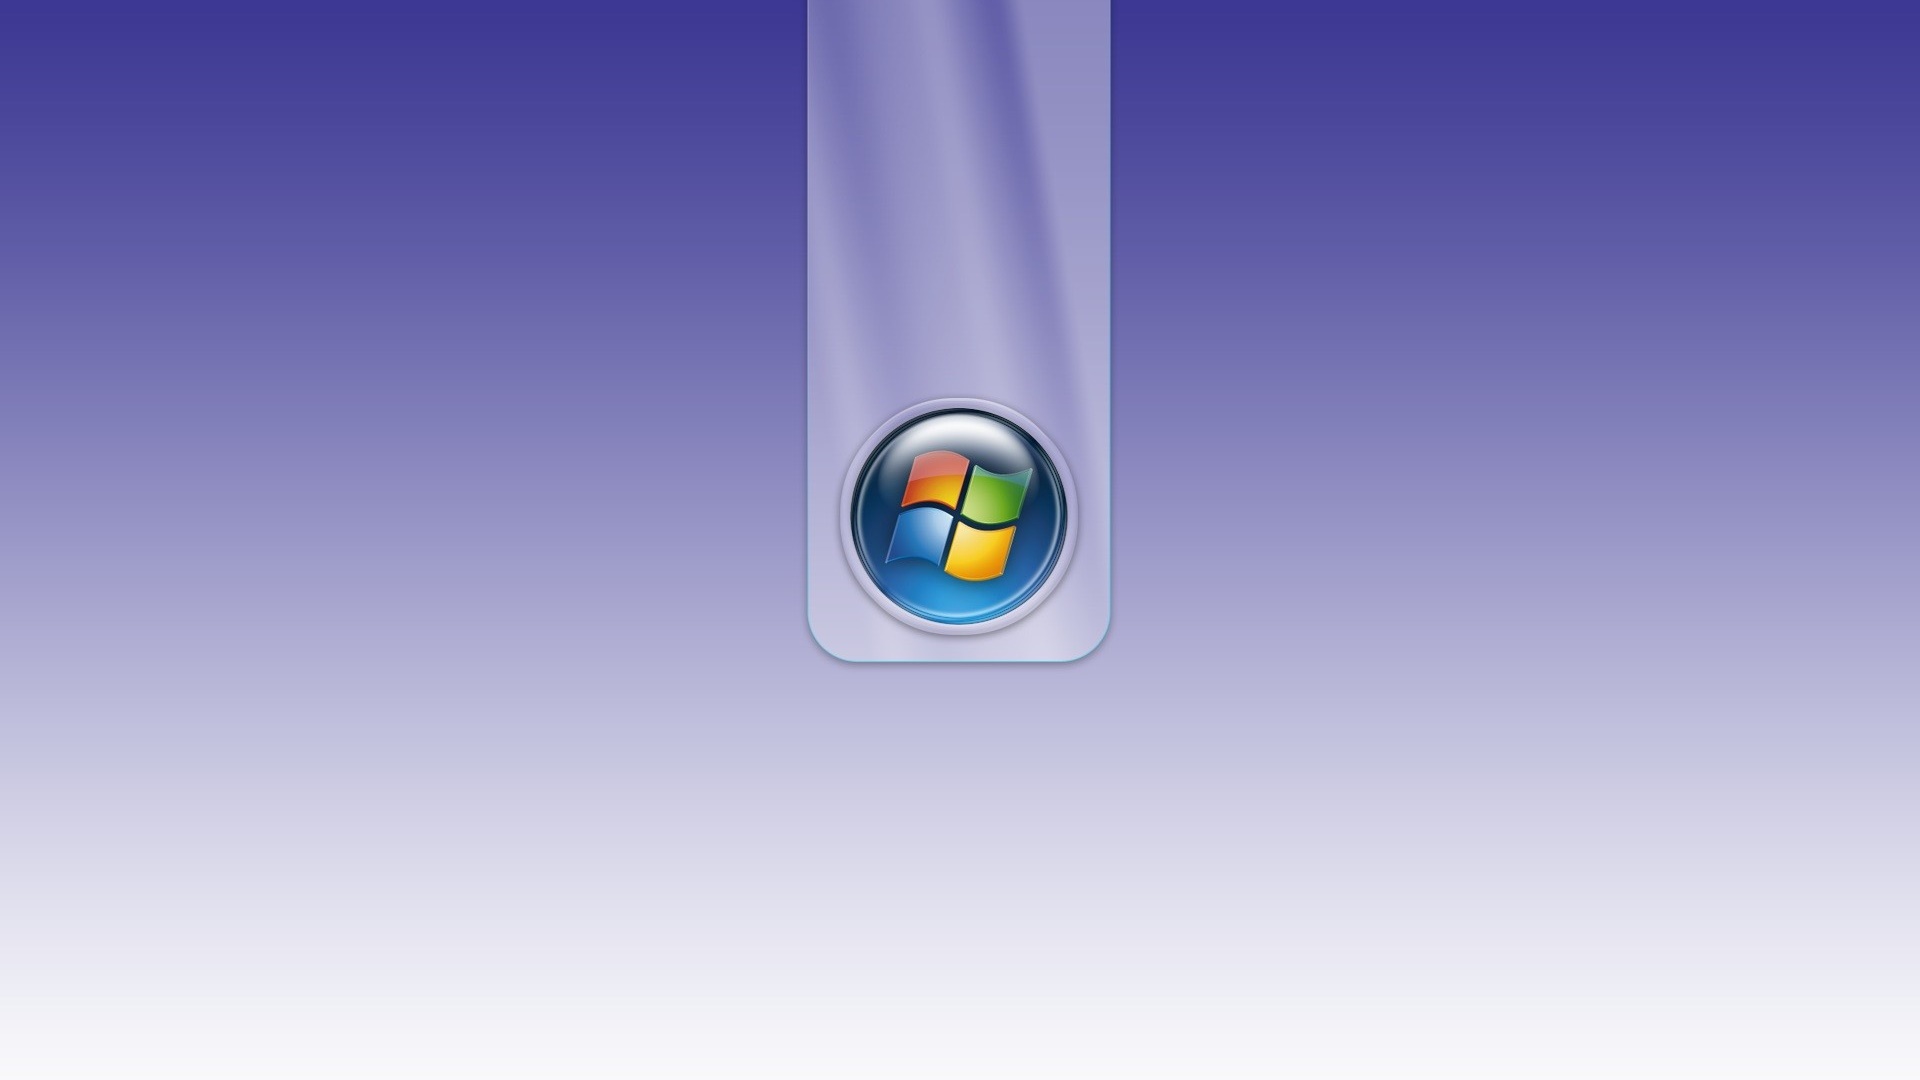 Windowsロゴ 青の背景 デスクトップの壁紙 19x1080 壁紙をダウンロード Ja Hdwall365 Com